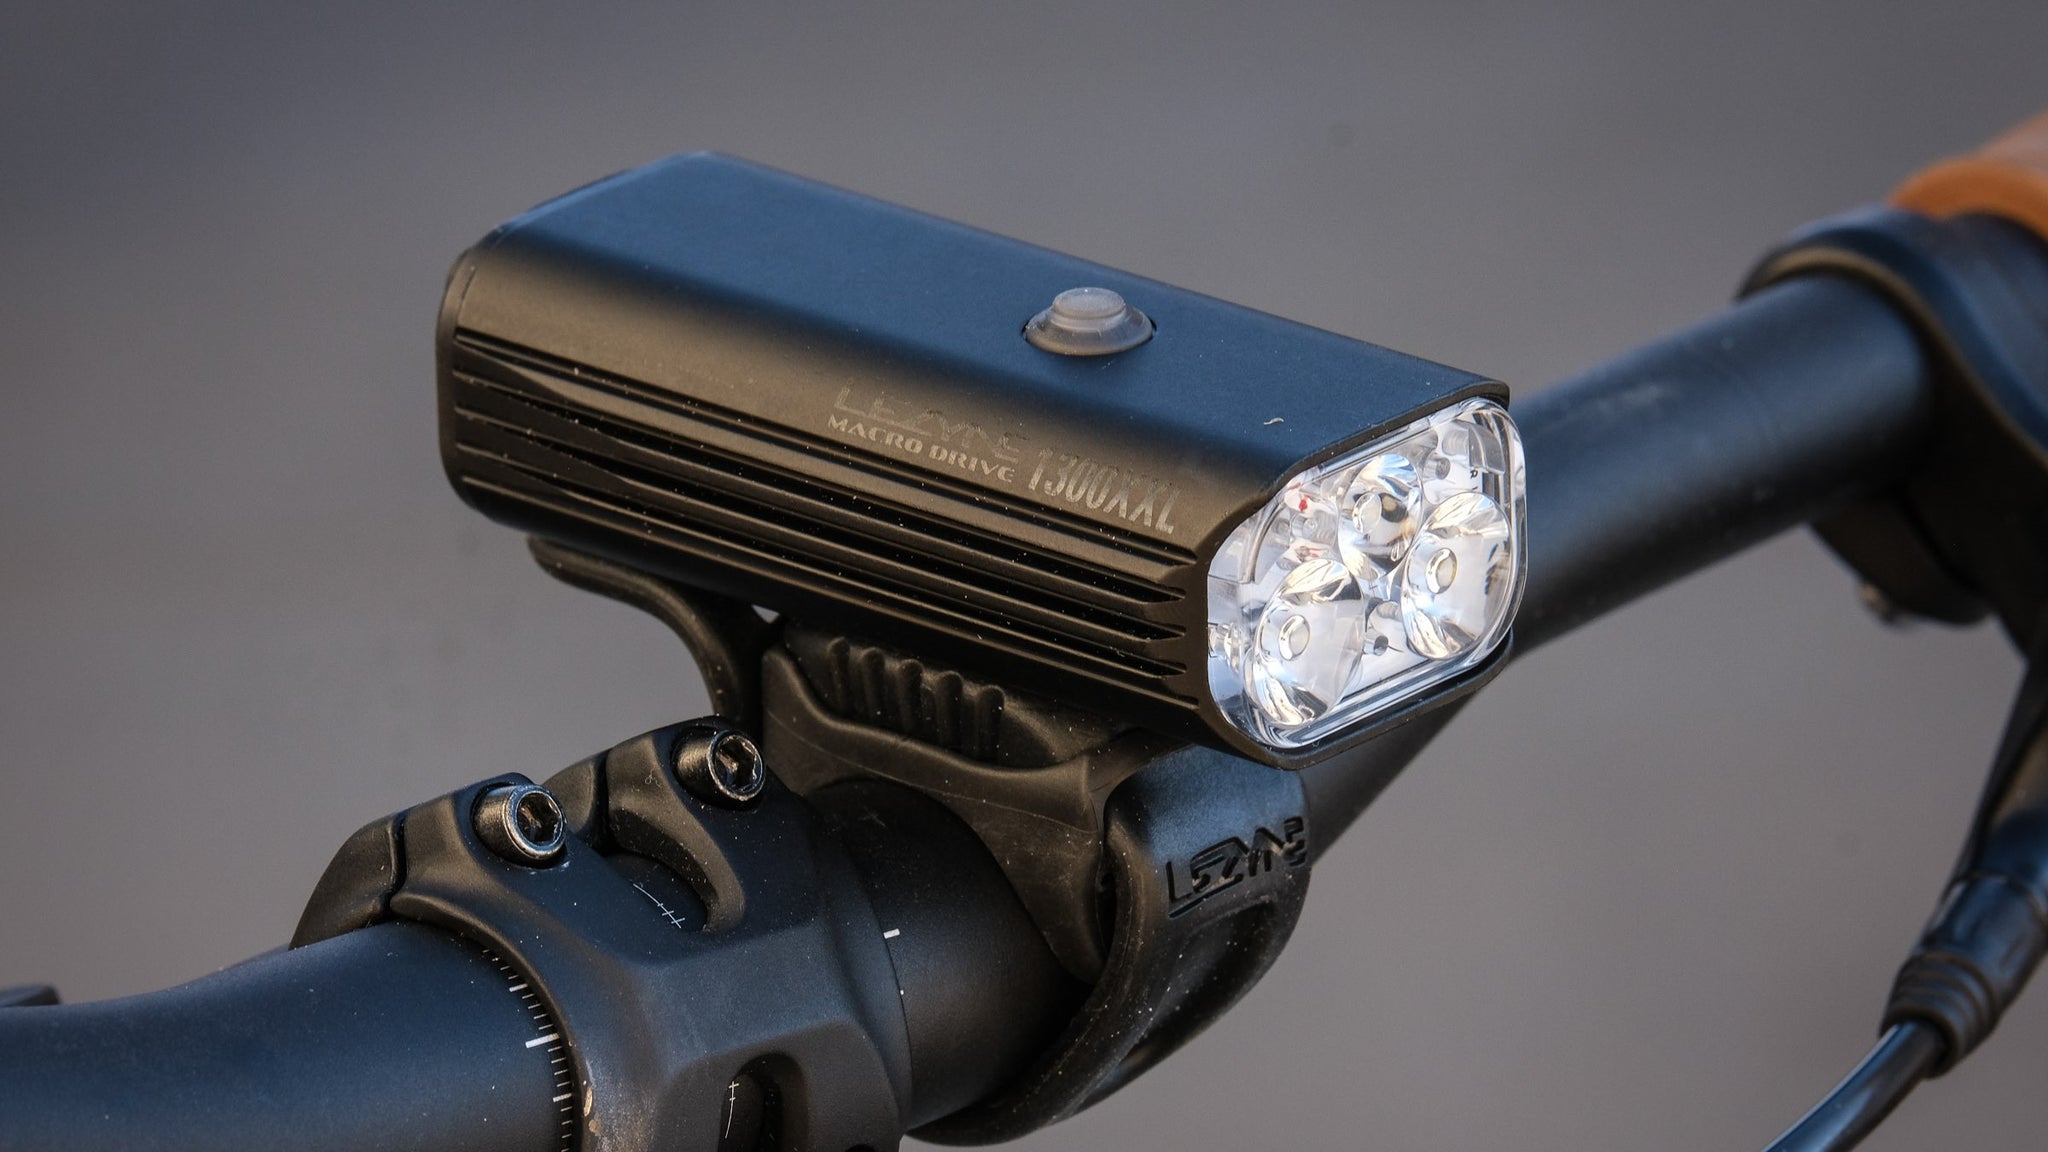 bike flashlight